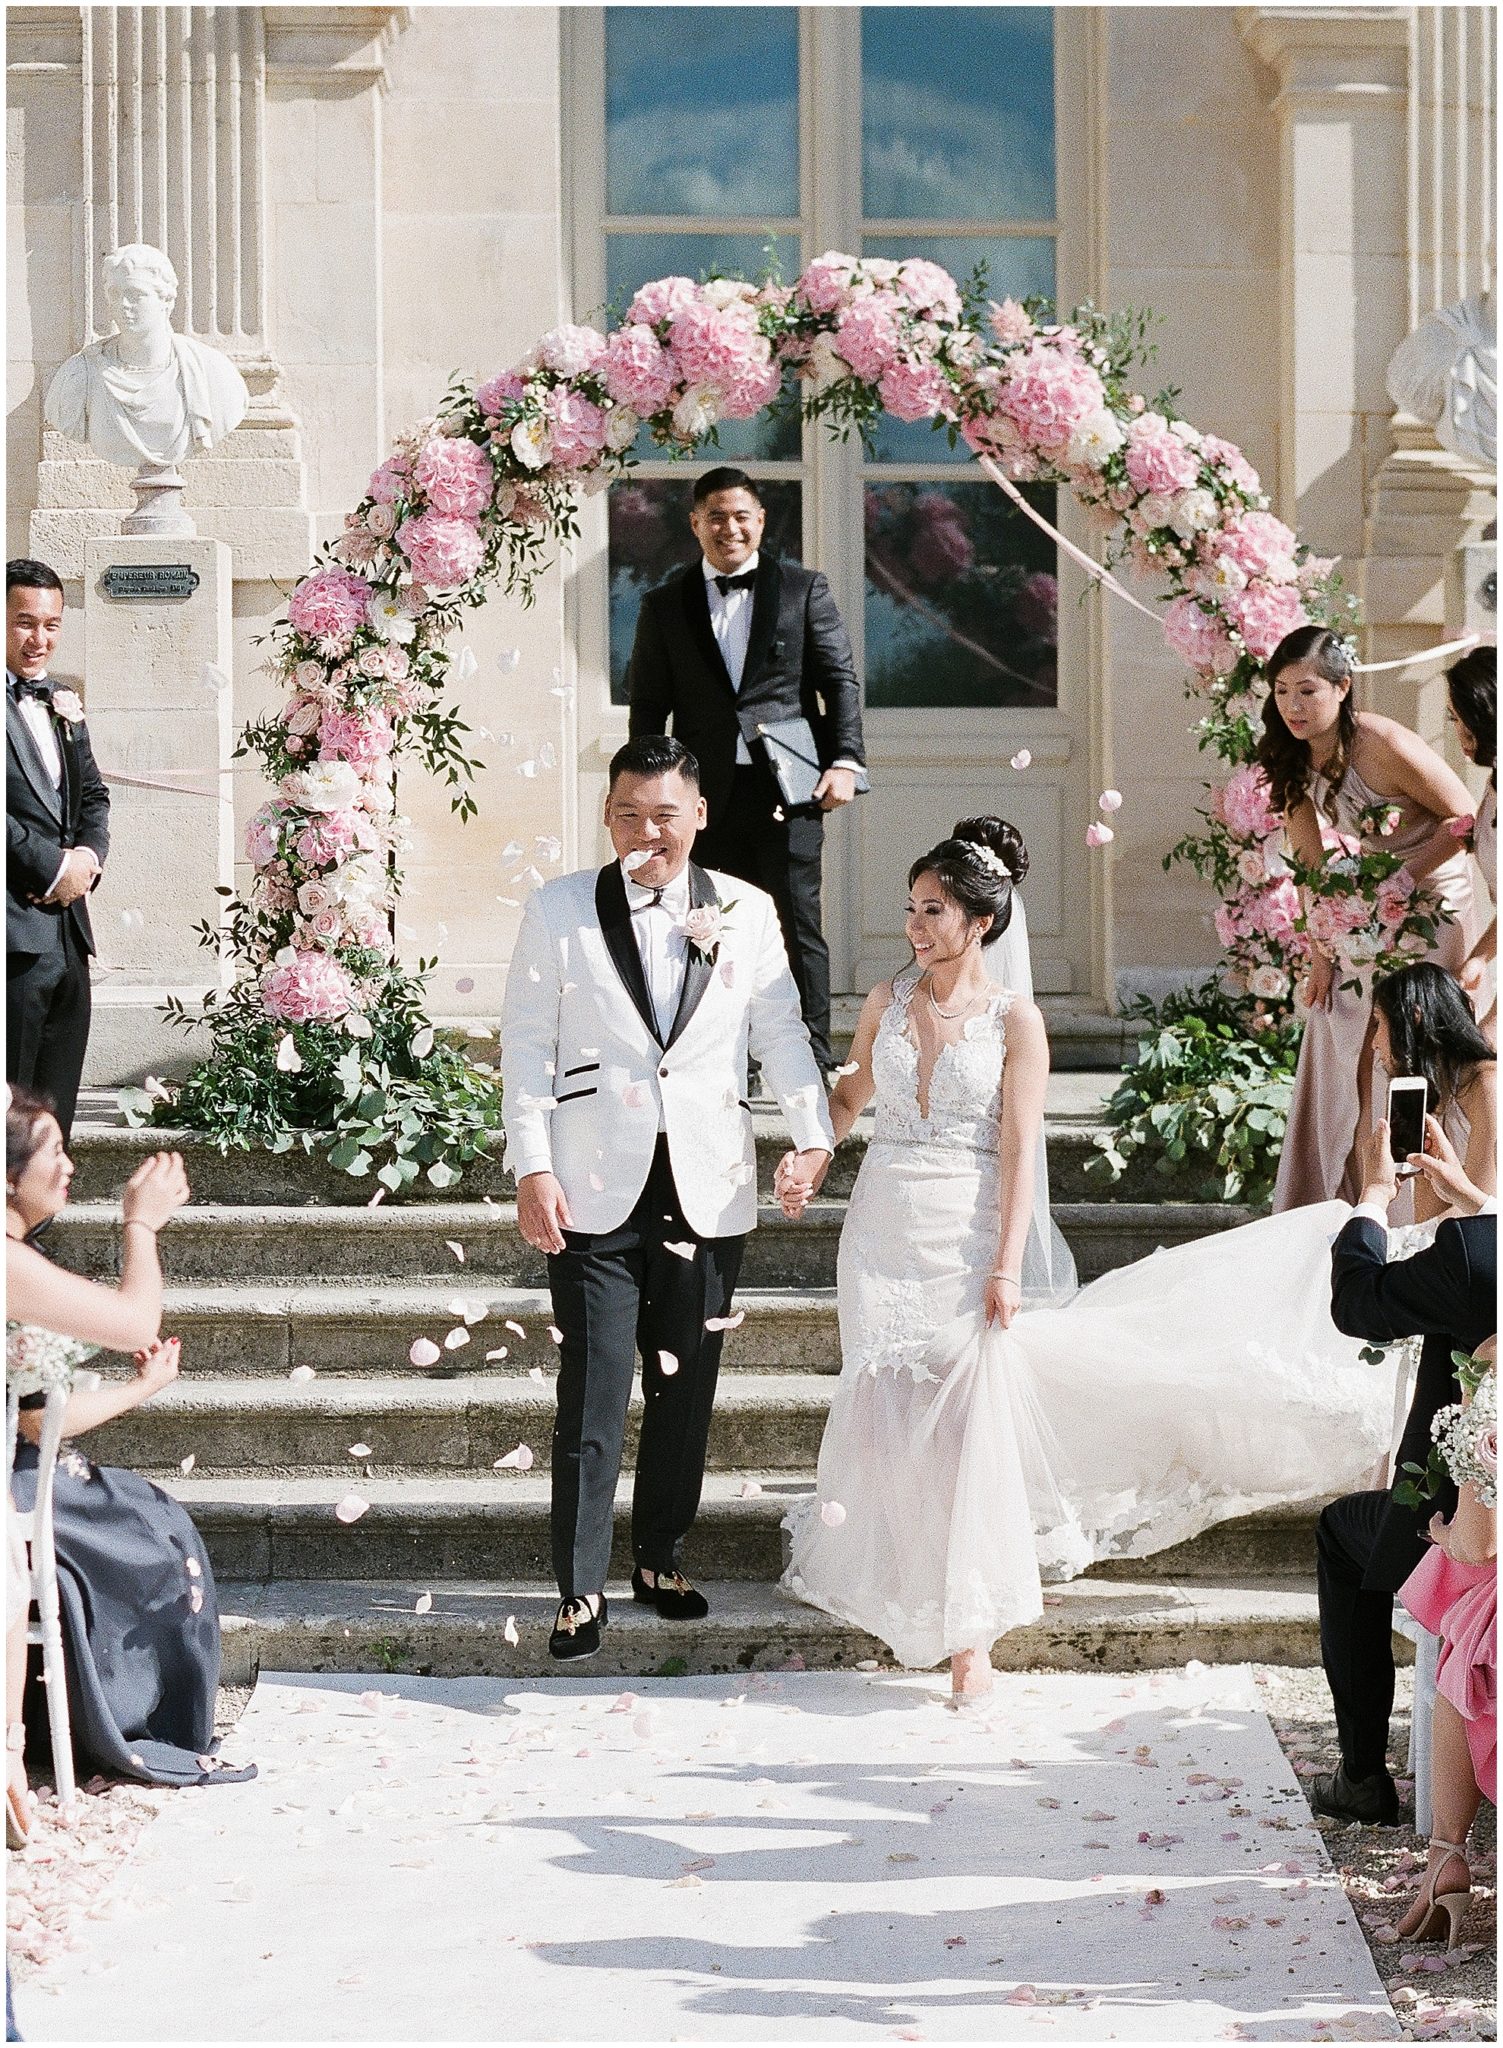 Wedding at Chateau de Chantilly near Paris